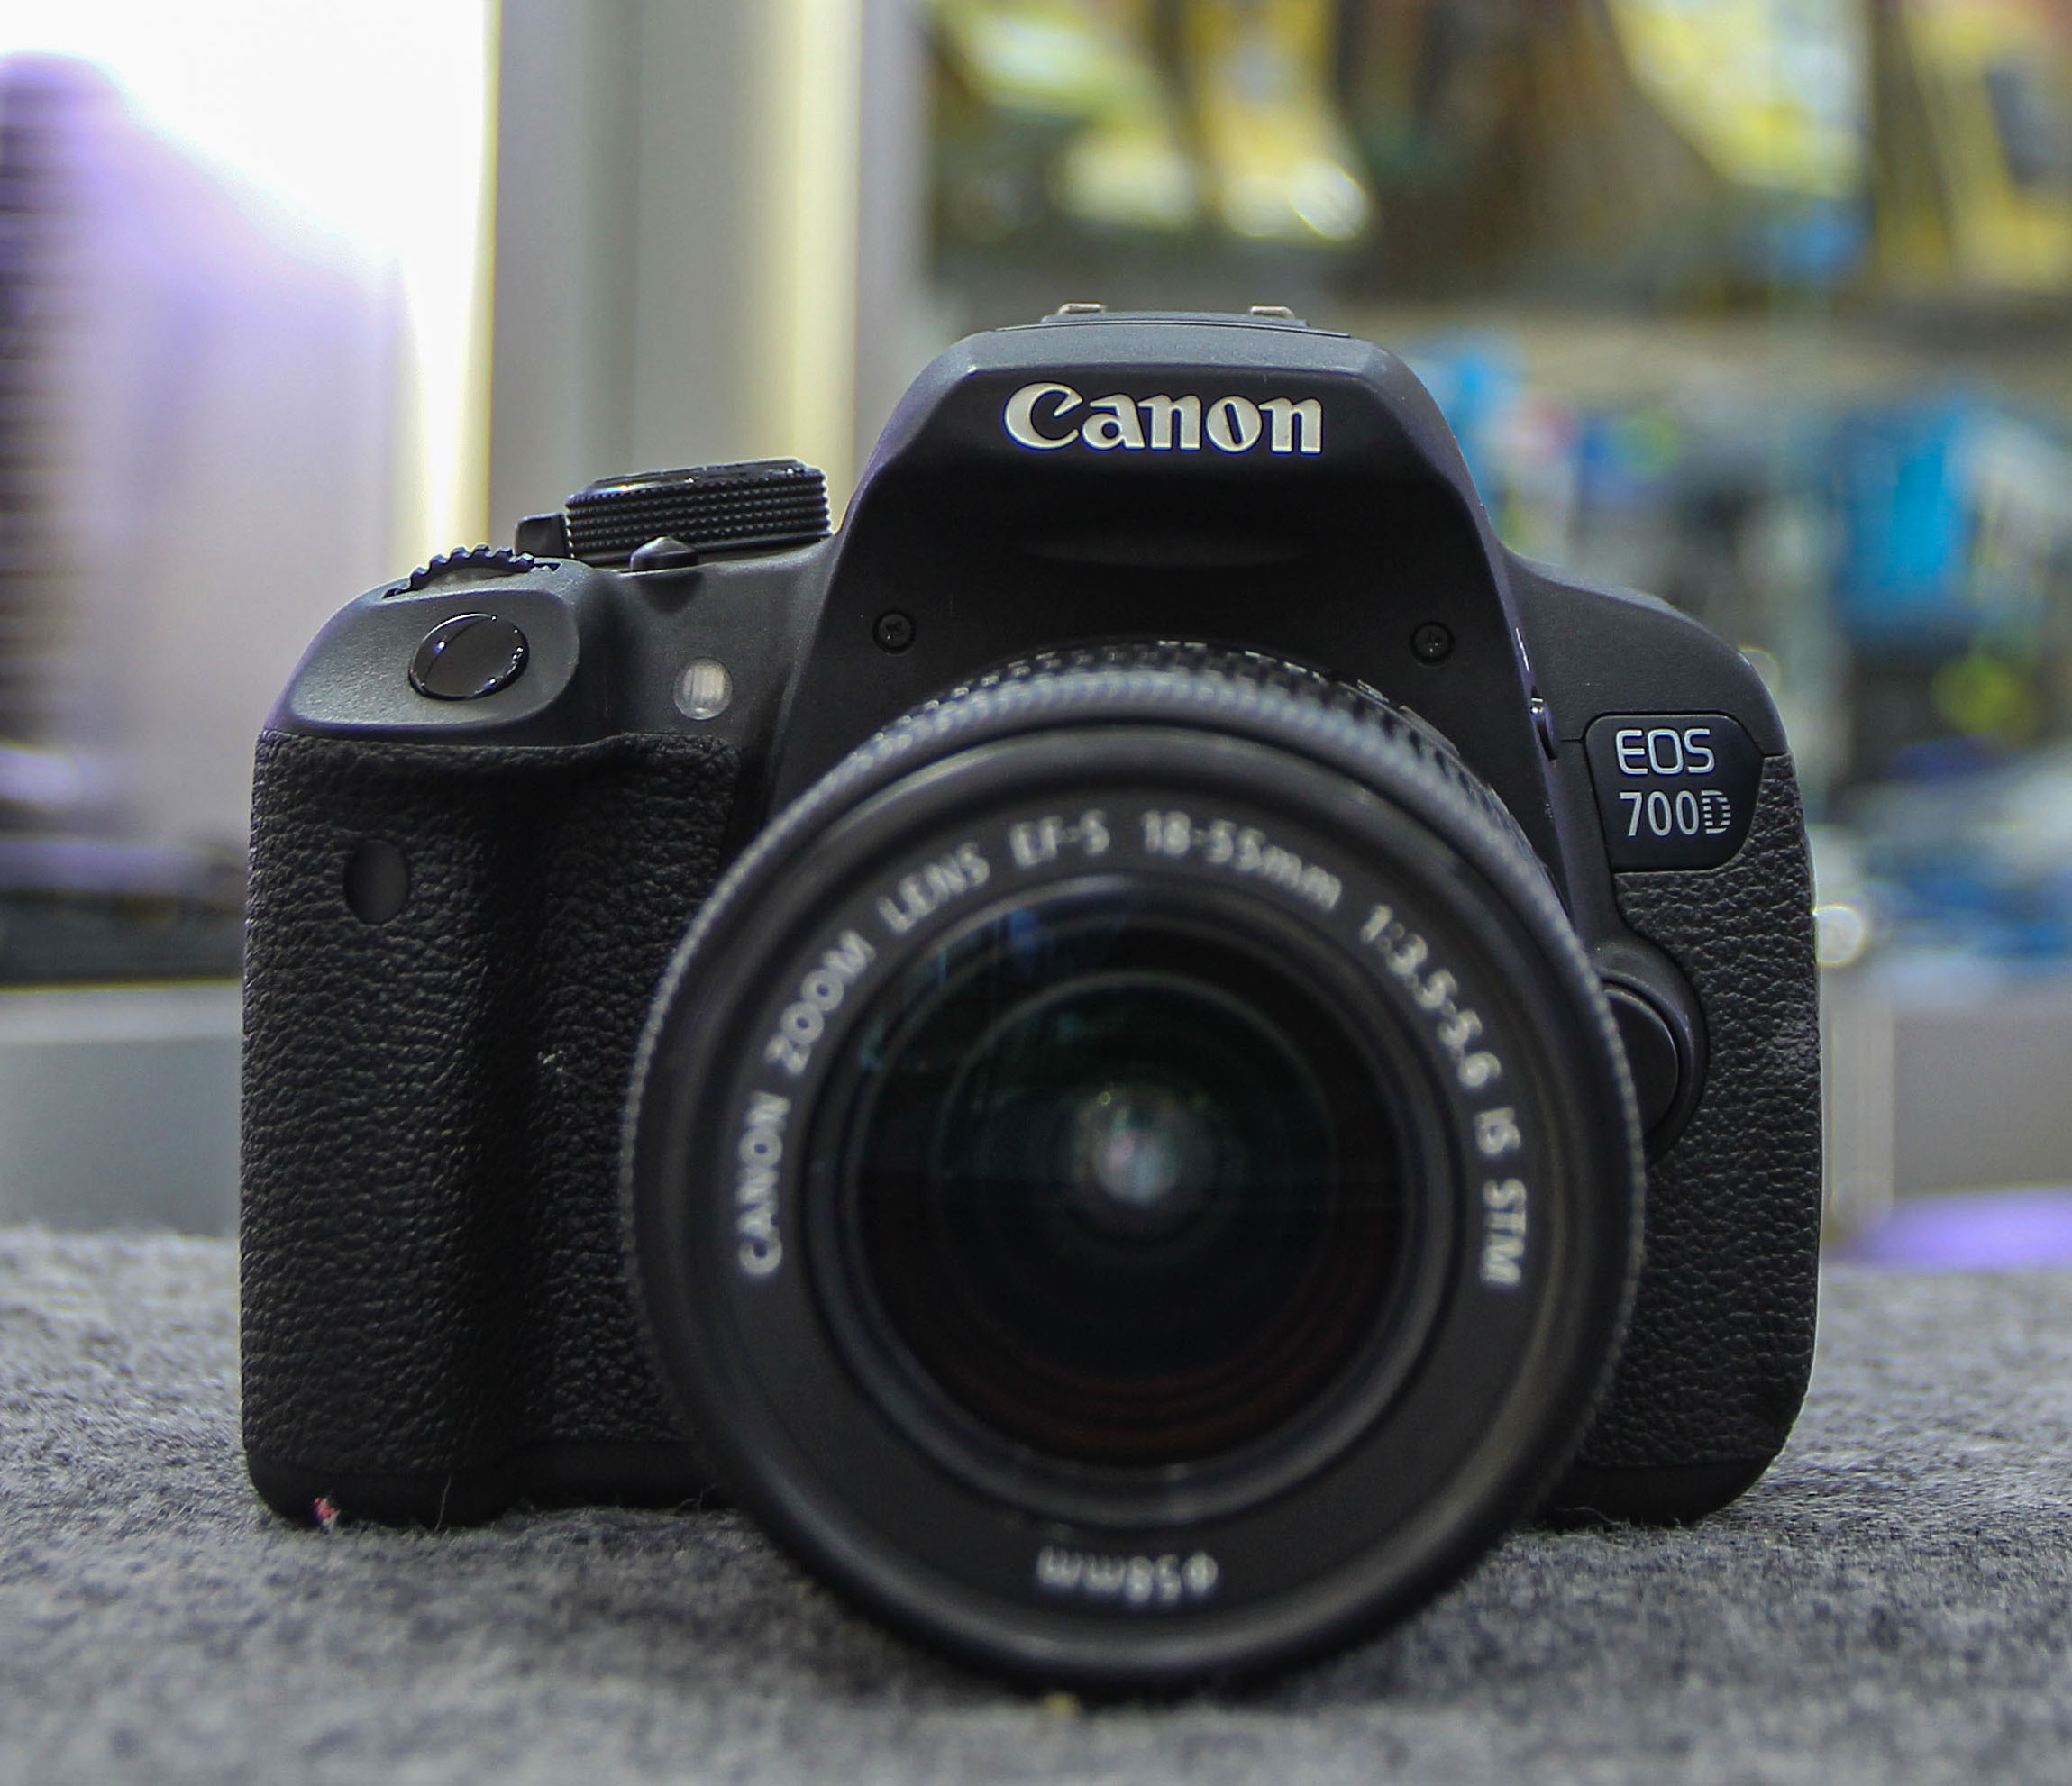 Máy ảnh DSLR Canon EOS700D / EOS Rebel T5i (EF-S 18-55mm F3.5-5.6 IS STM) - 18MP